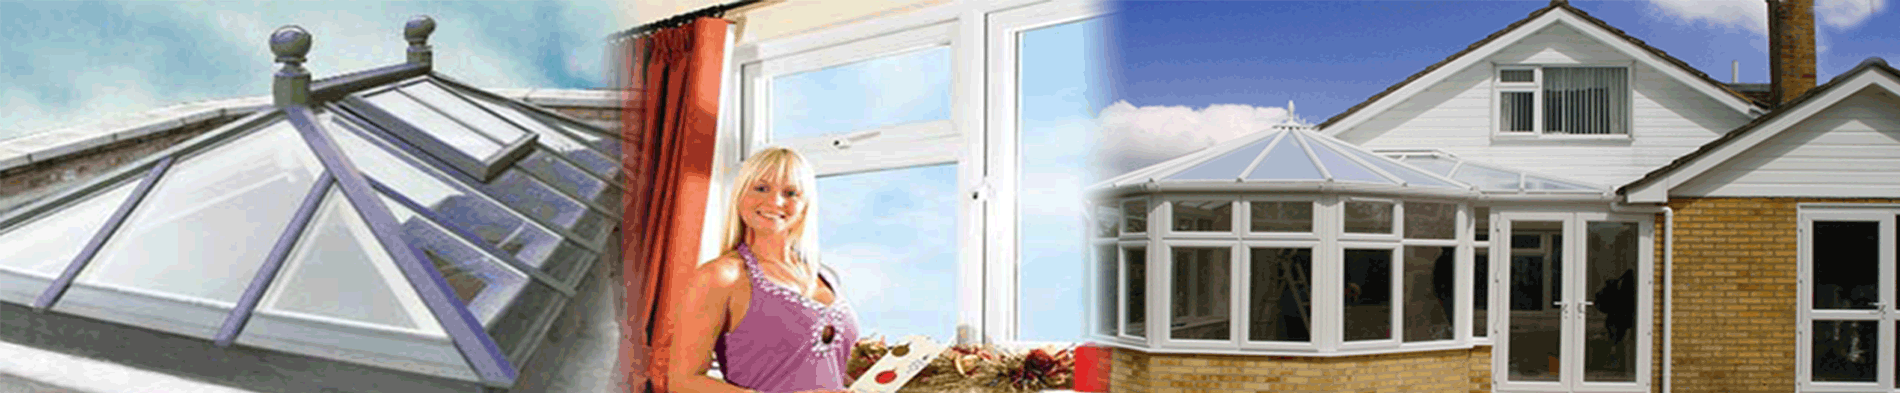 Rooflight conservatory windows and doors